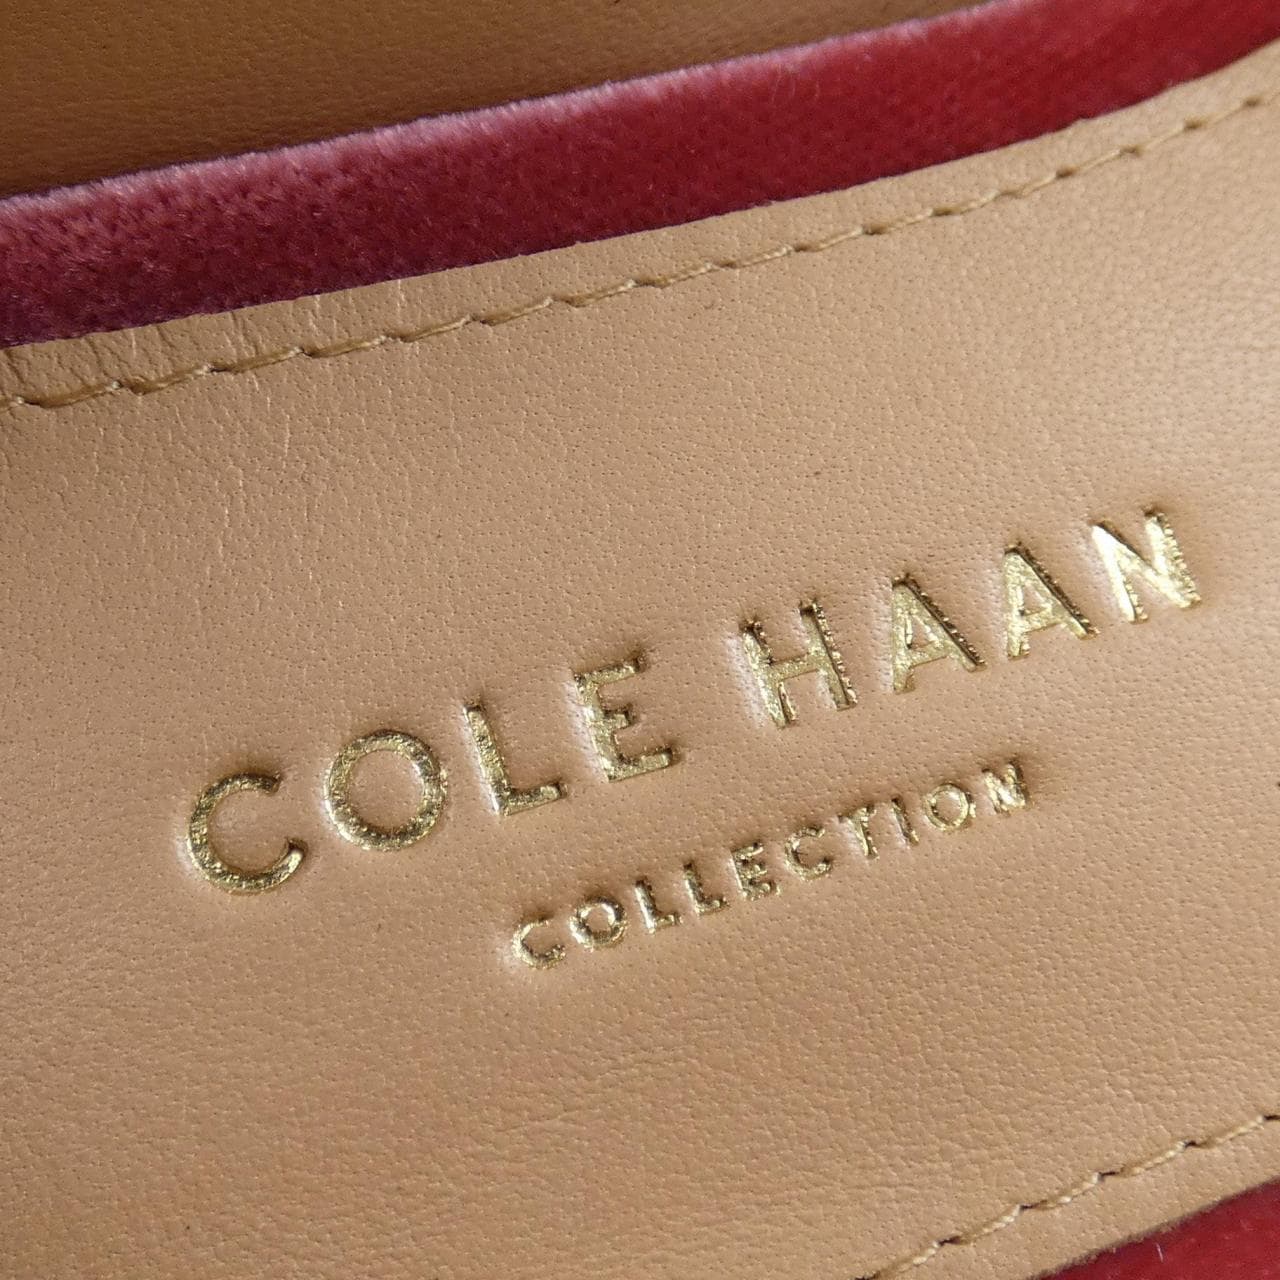 Cole Haan COLE HAAN shoes